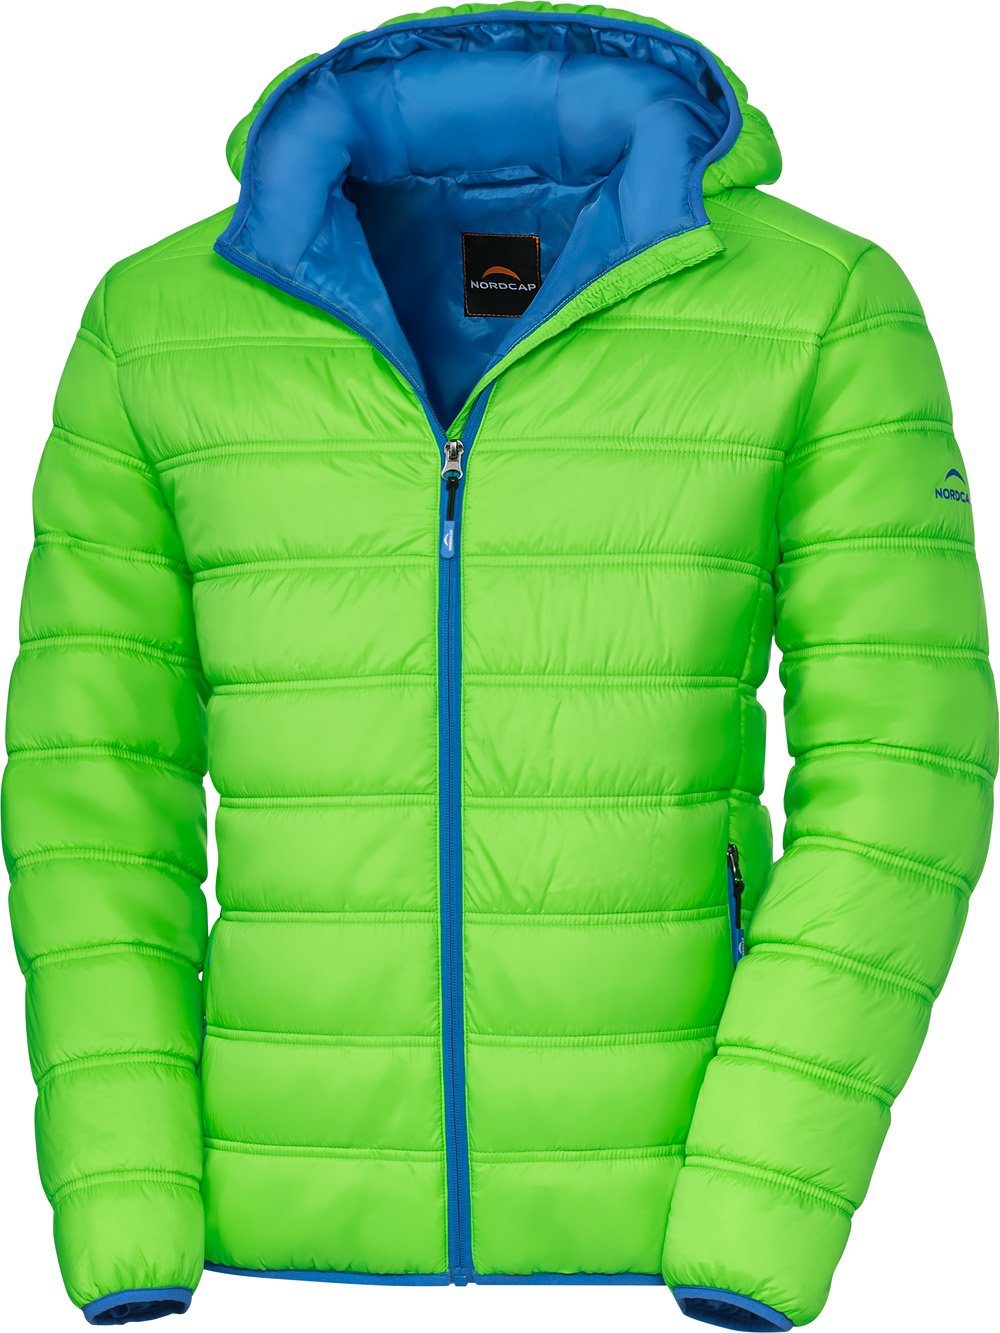 Nordcap Steppjacke ultraleichte Jacke mit Kapuze grün